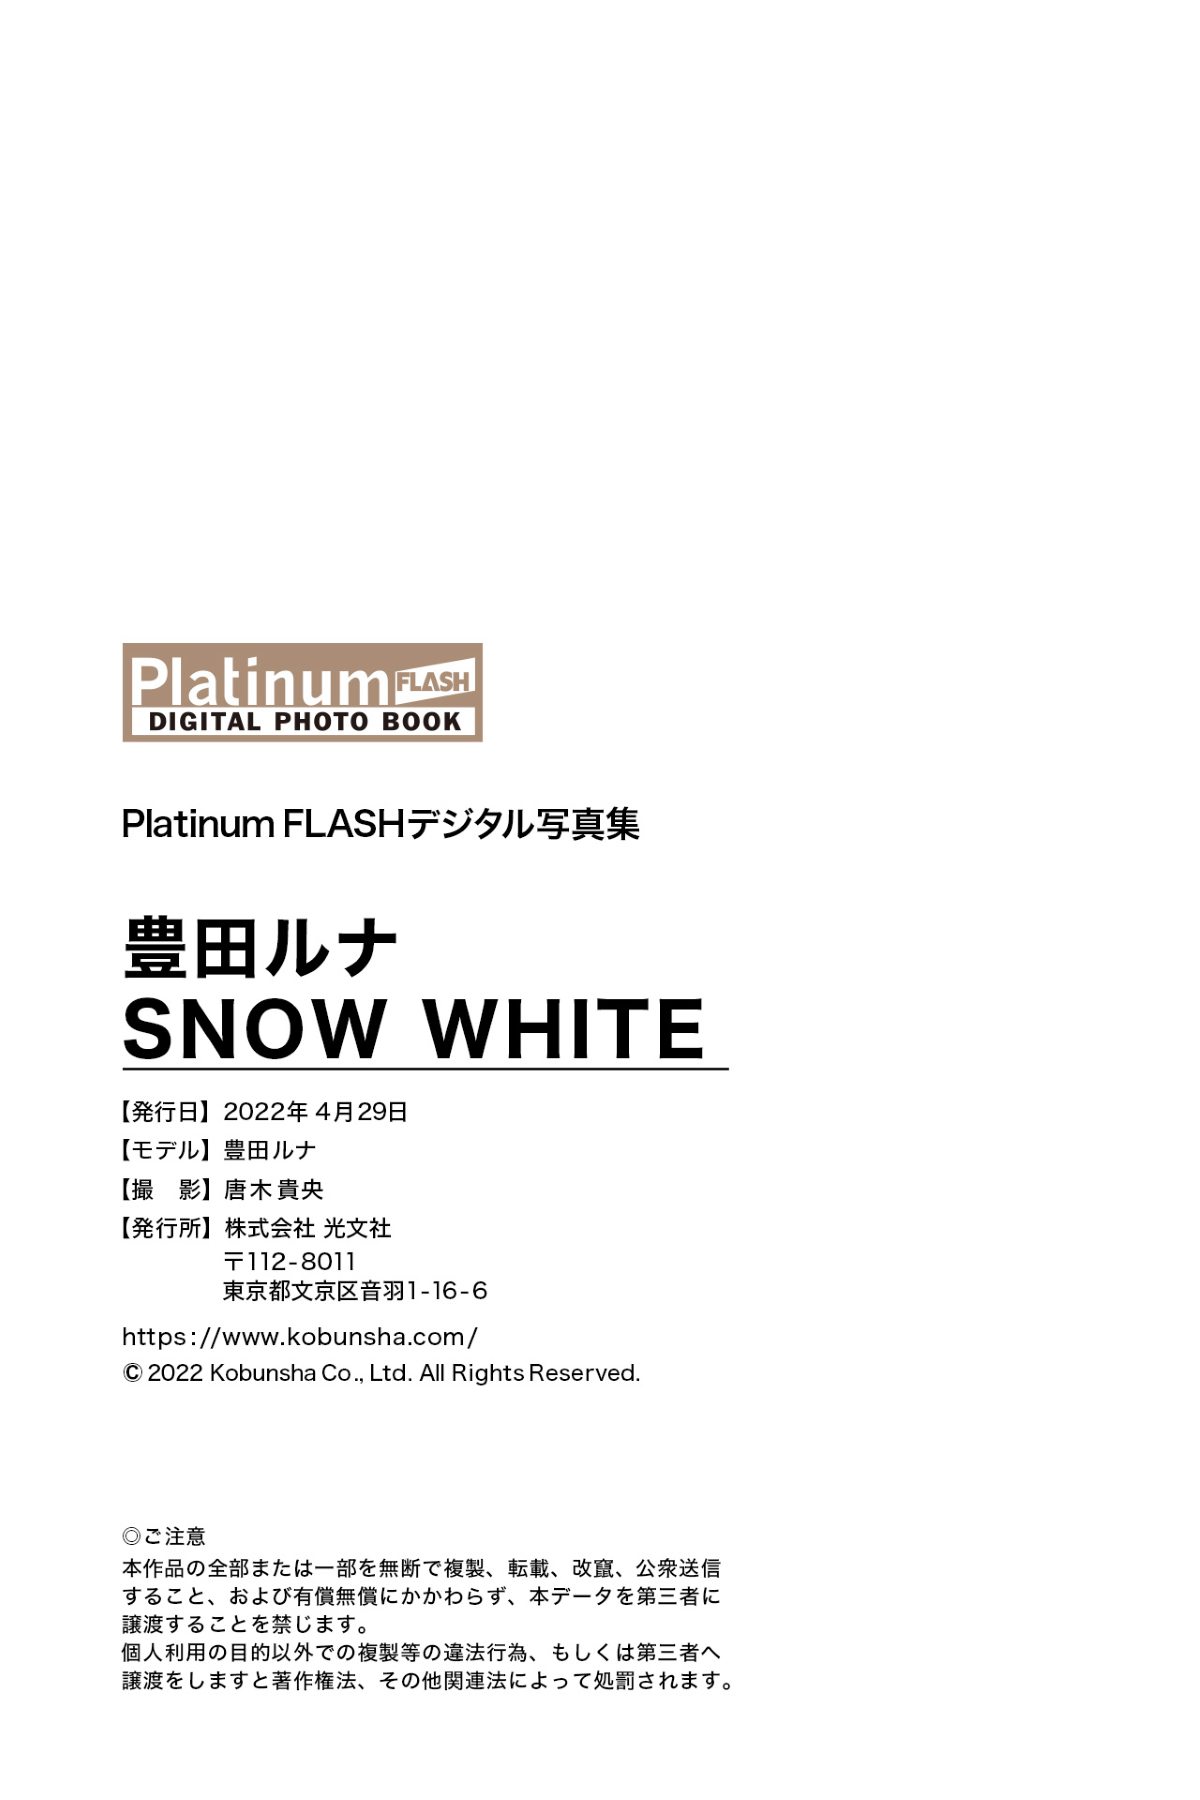 Photobook Platinum FLASHデジタル写真集 豊田ルナ SNOW WHITE 00060 9739448721.jpg